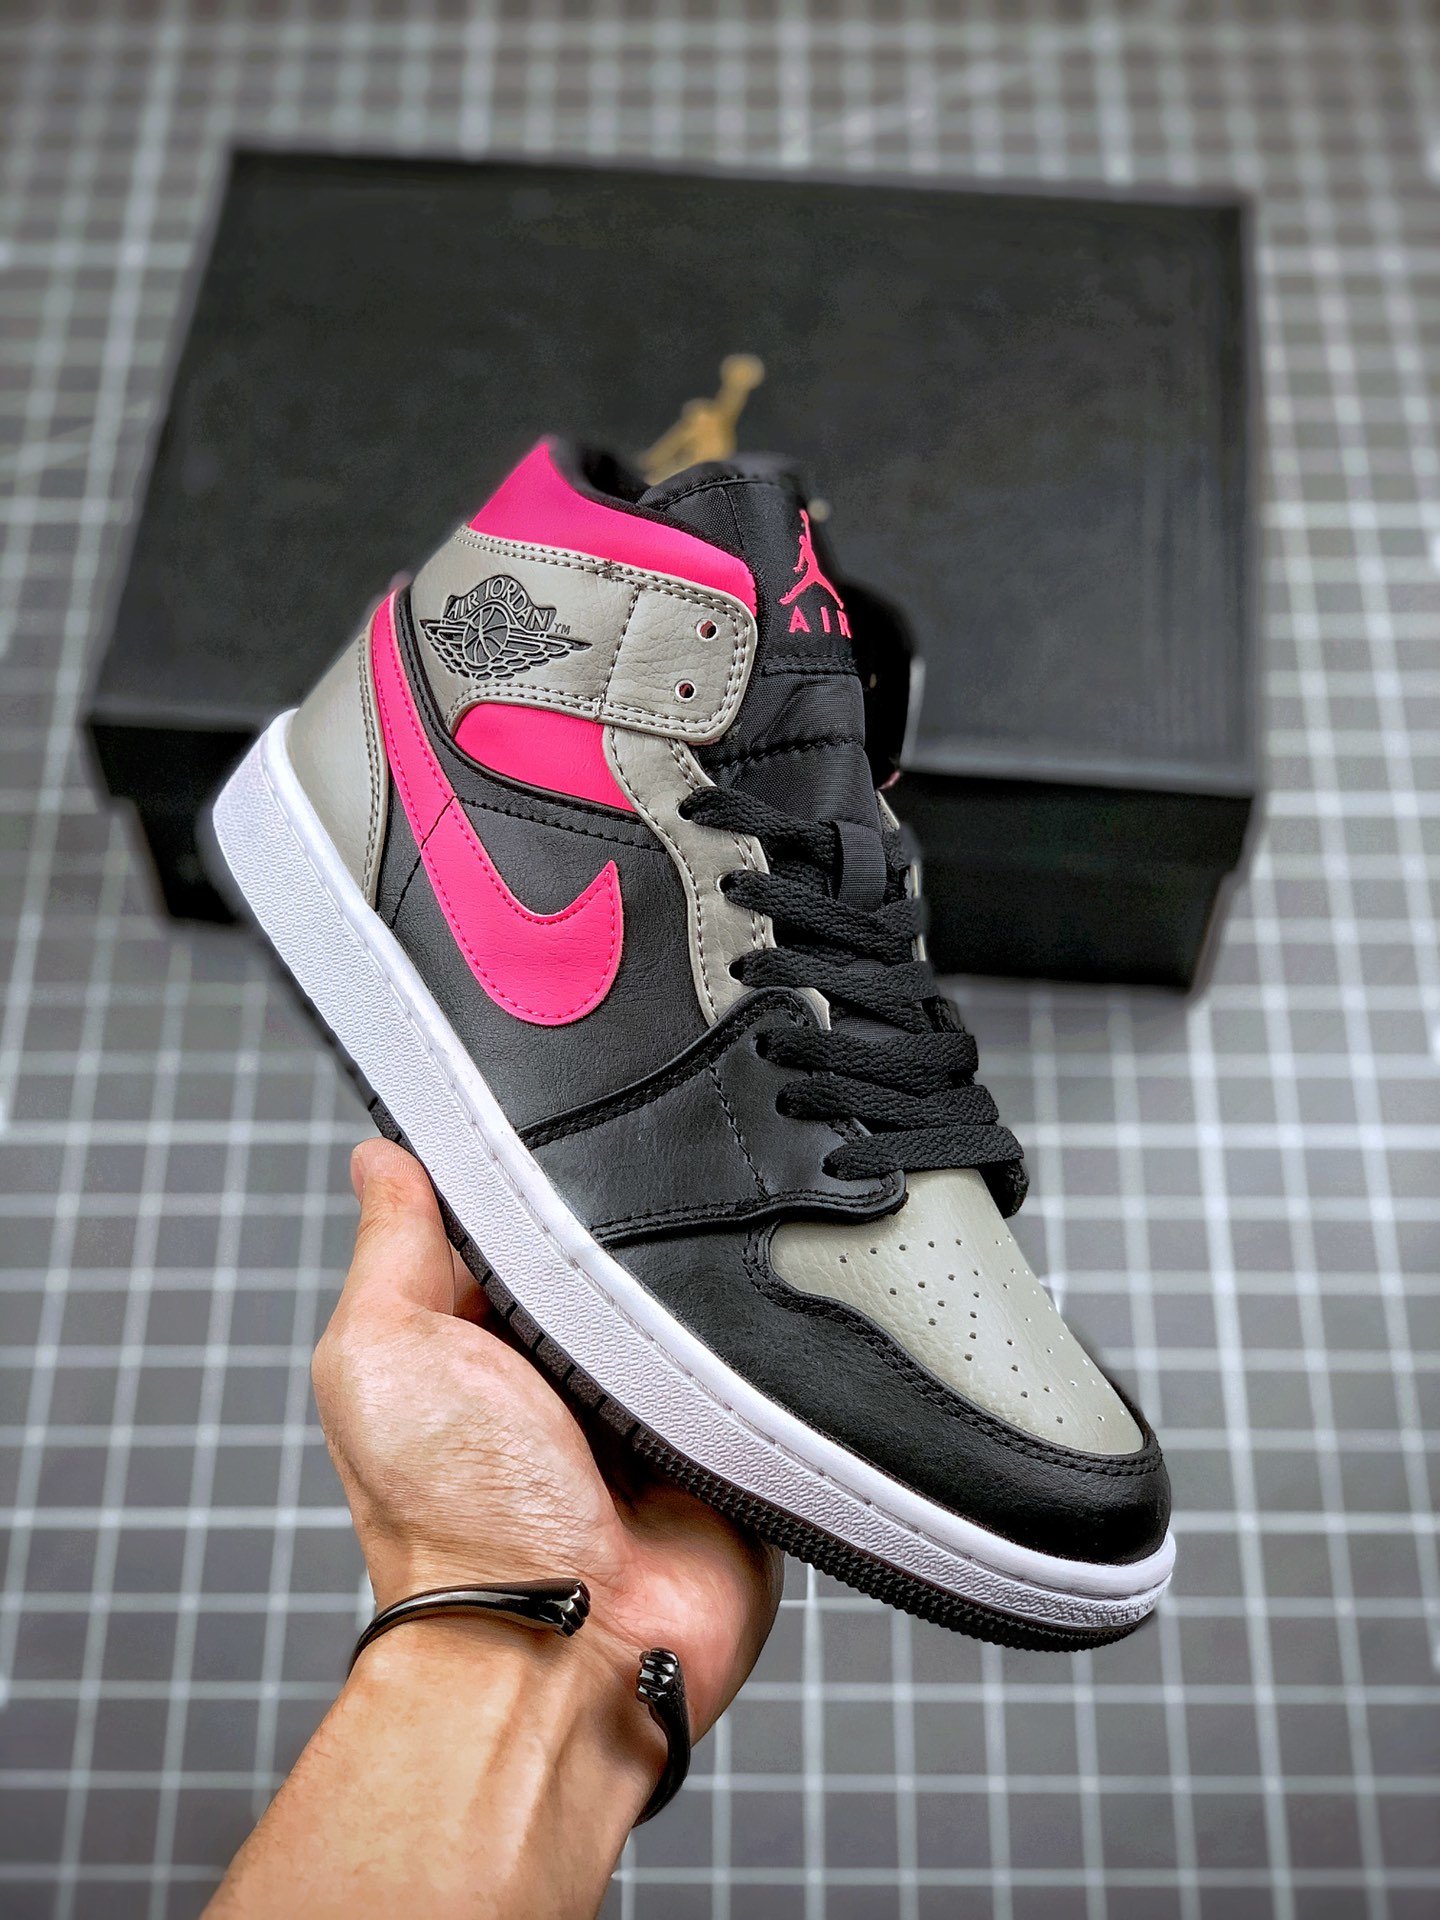 Air JD Jordan 1 Mid "Pink Shadow" 554724-059 Shoes